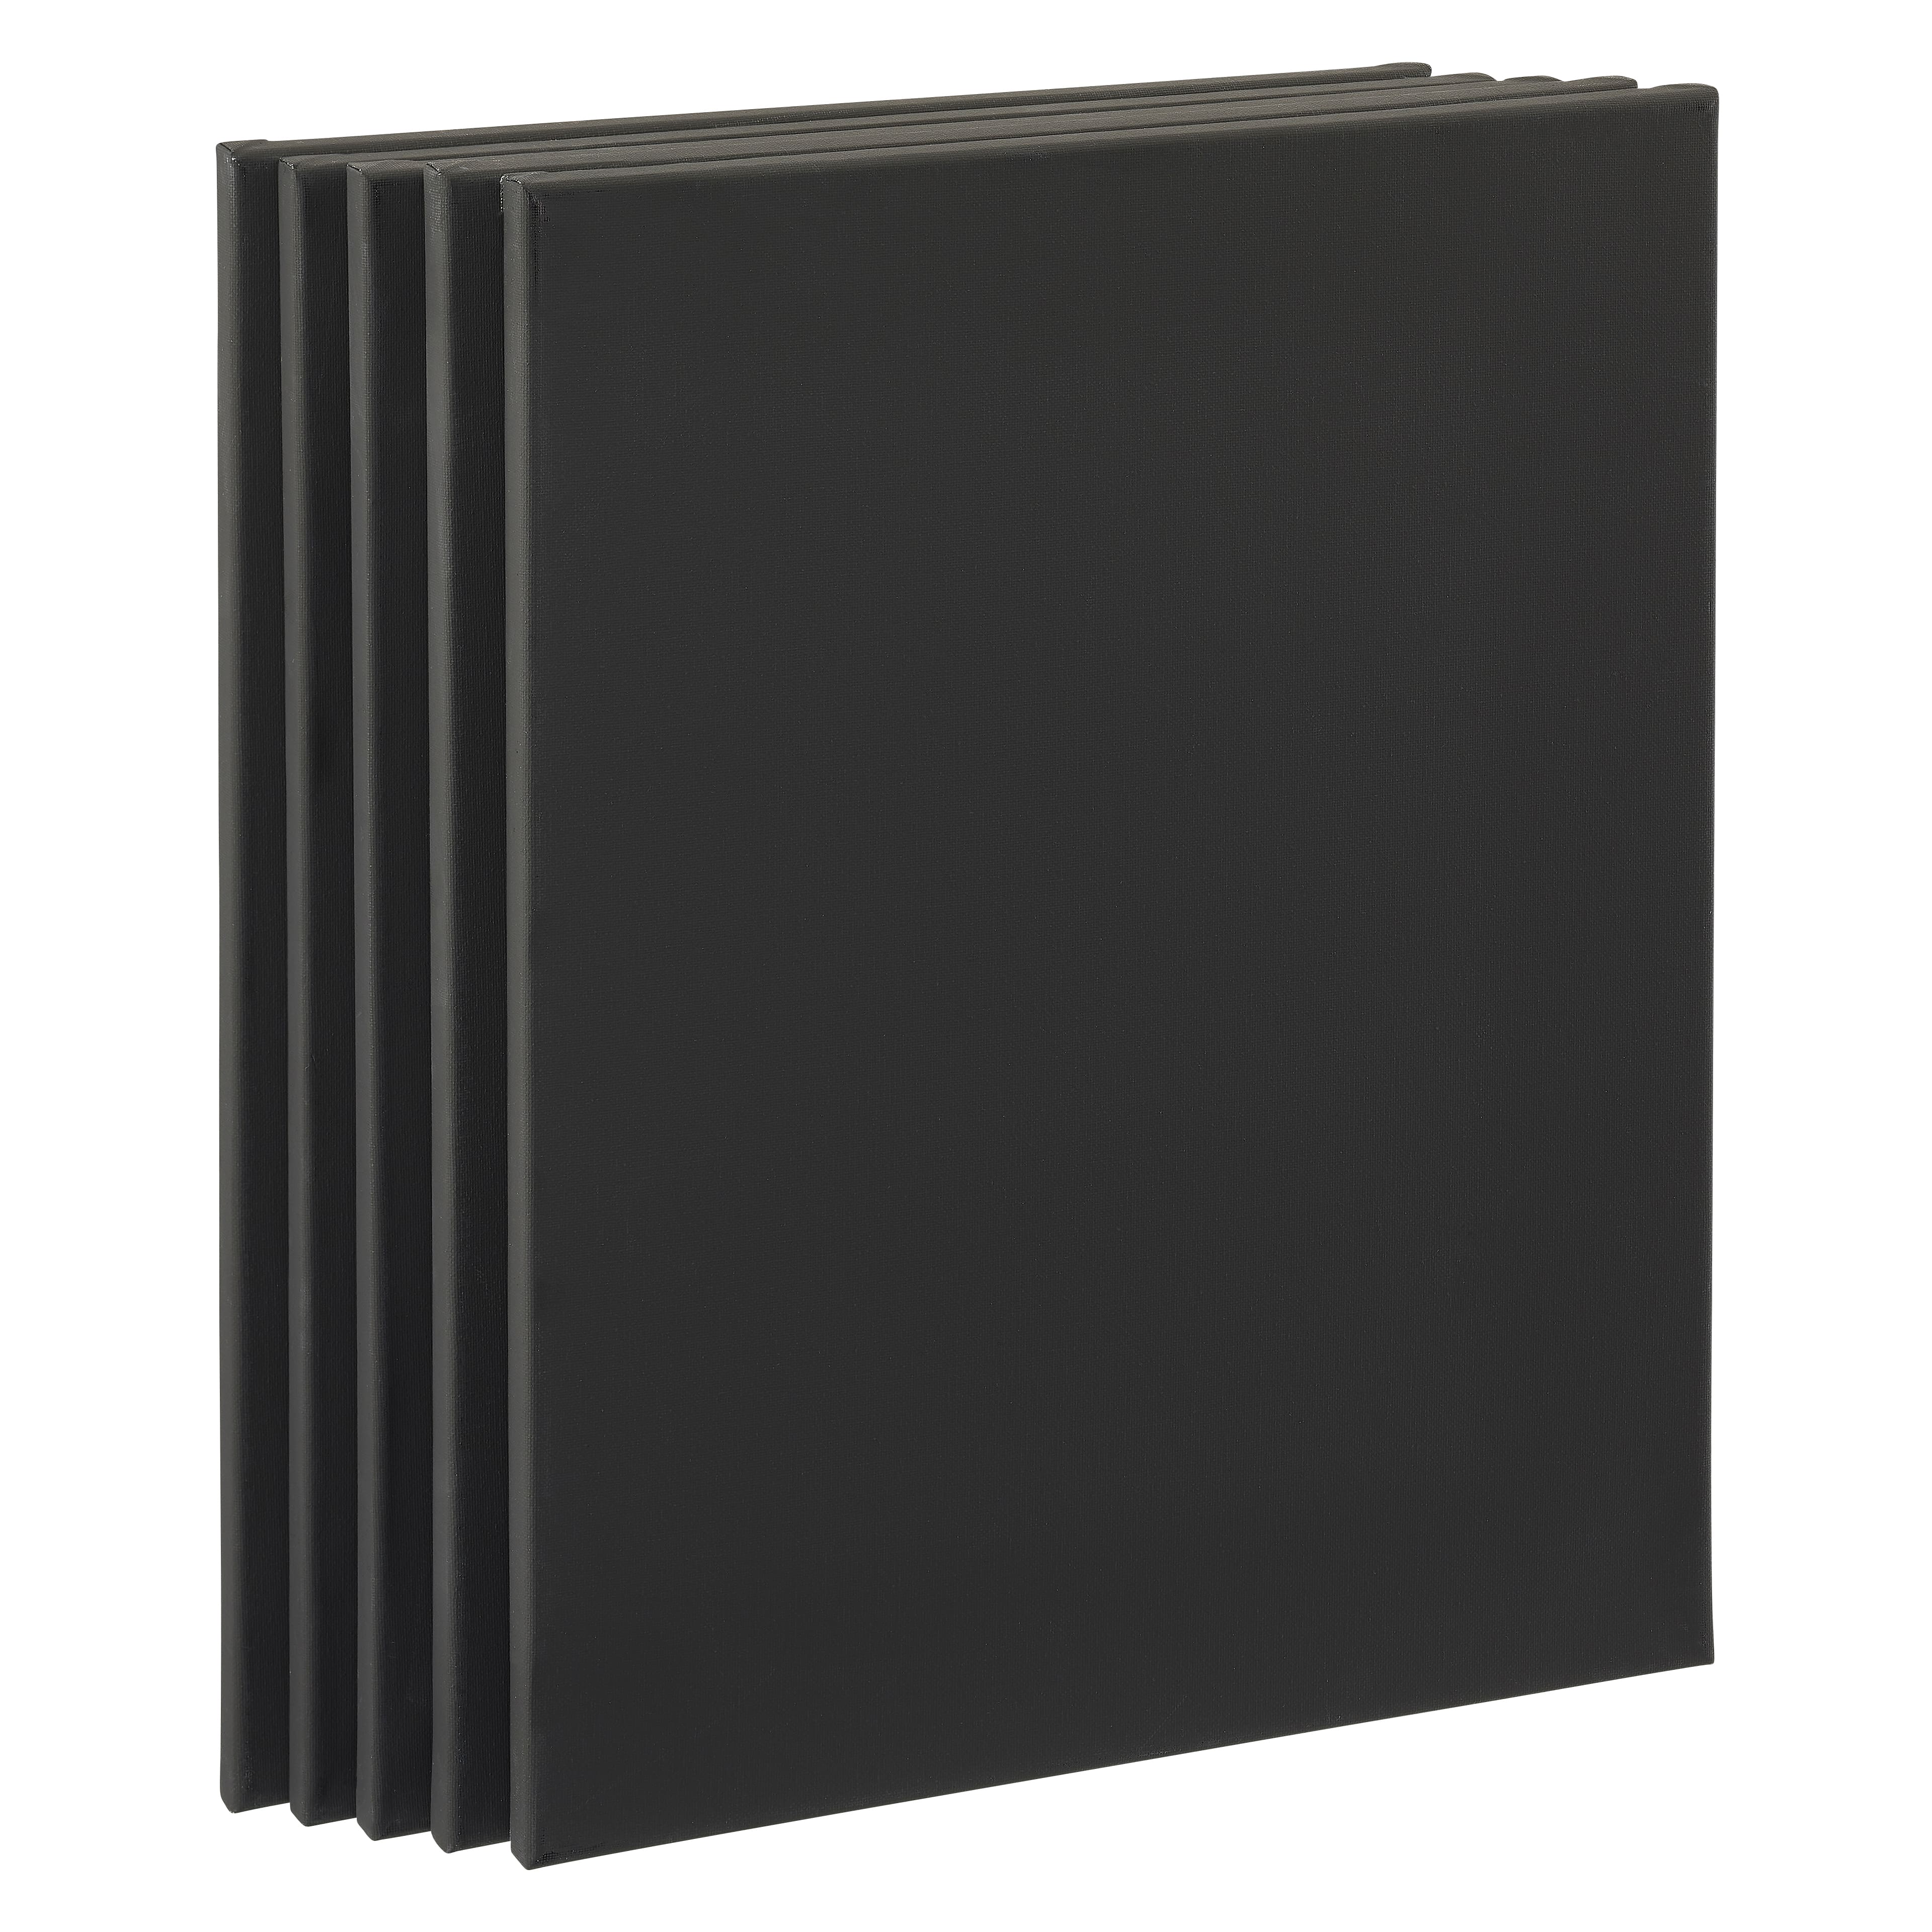 5 Pack Black Canvas Super Value Pack by Artist&#x27;s Loft&#xAE; Necessities&#x2122;